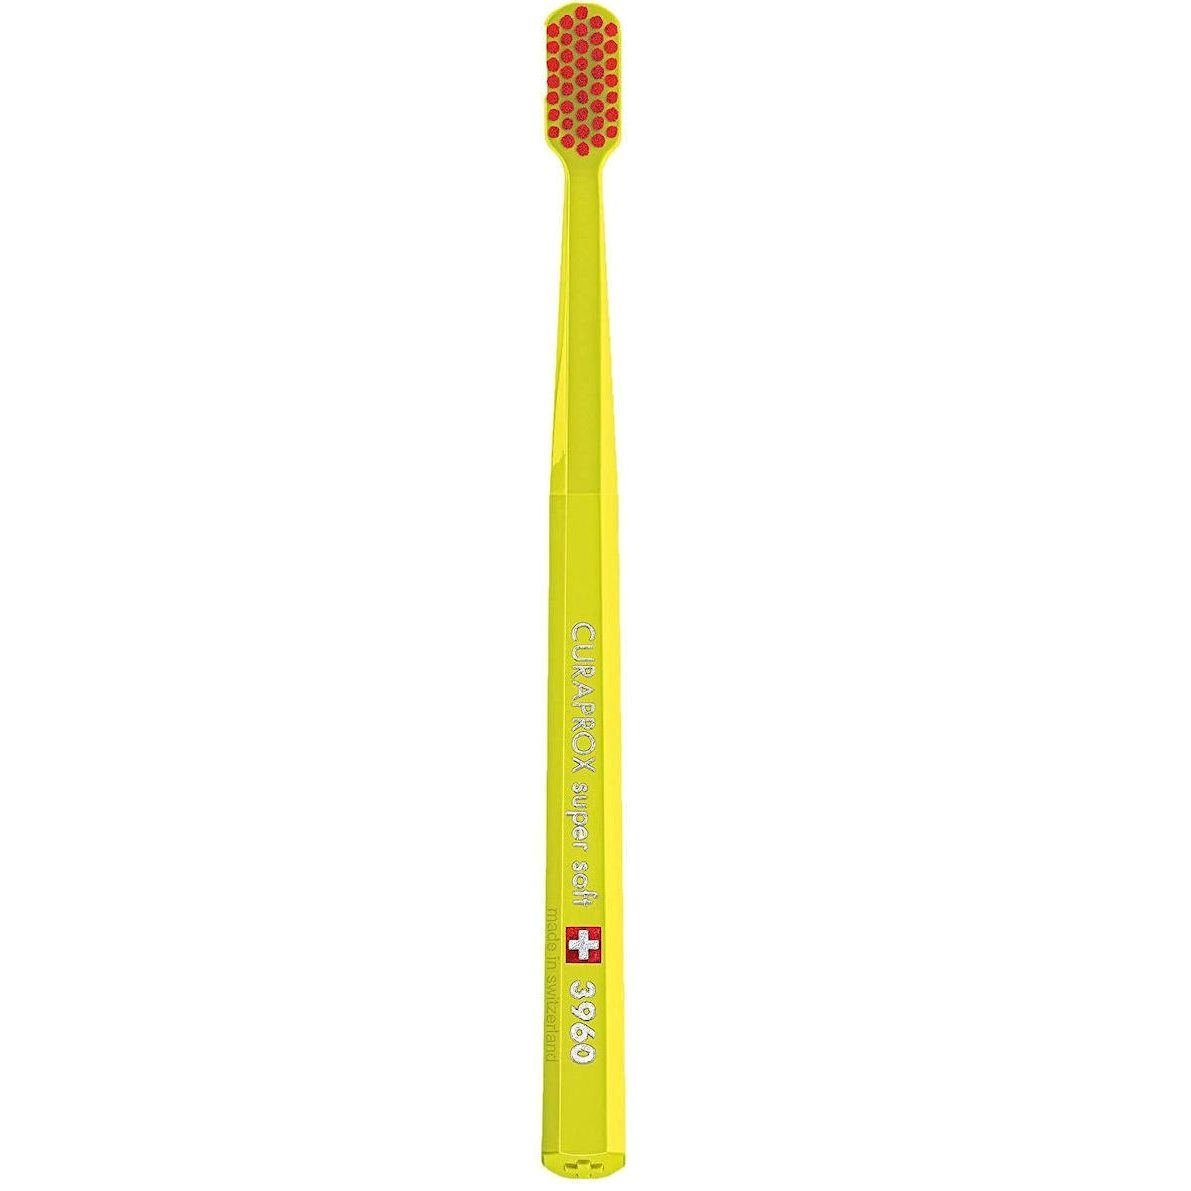 Curaprox CS 3960 Super Soft Toothbrush Πολύ Μαλακή Οδοντόβουρτσα με Εξαιρετικά Απαλές & Ανθεκτικές Ίνες Curen για Αποτελεσματικό Καθαρισμό 1 Τεμάχιο - Κίτρινο 49596